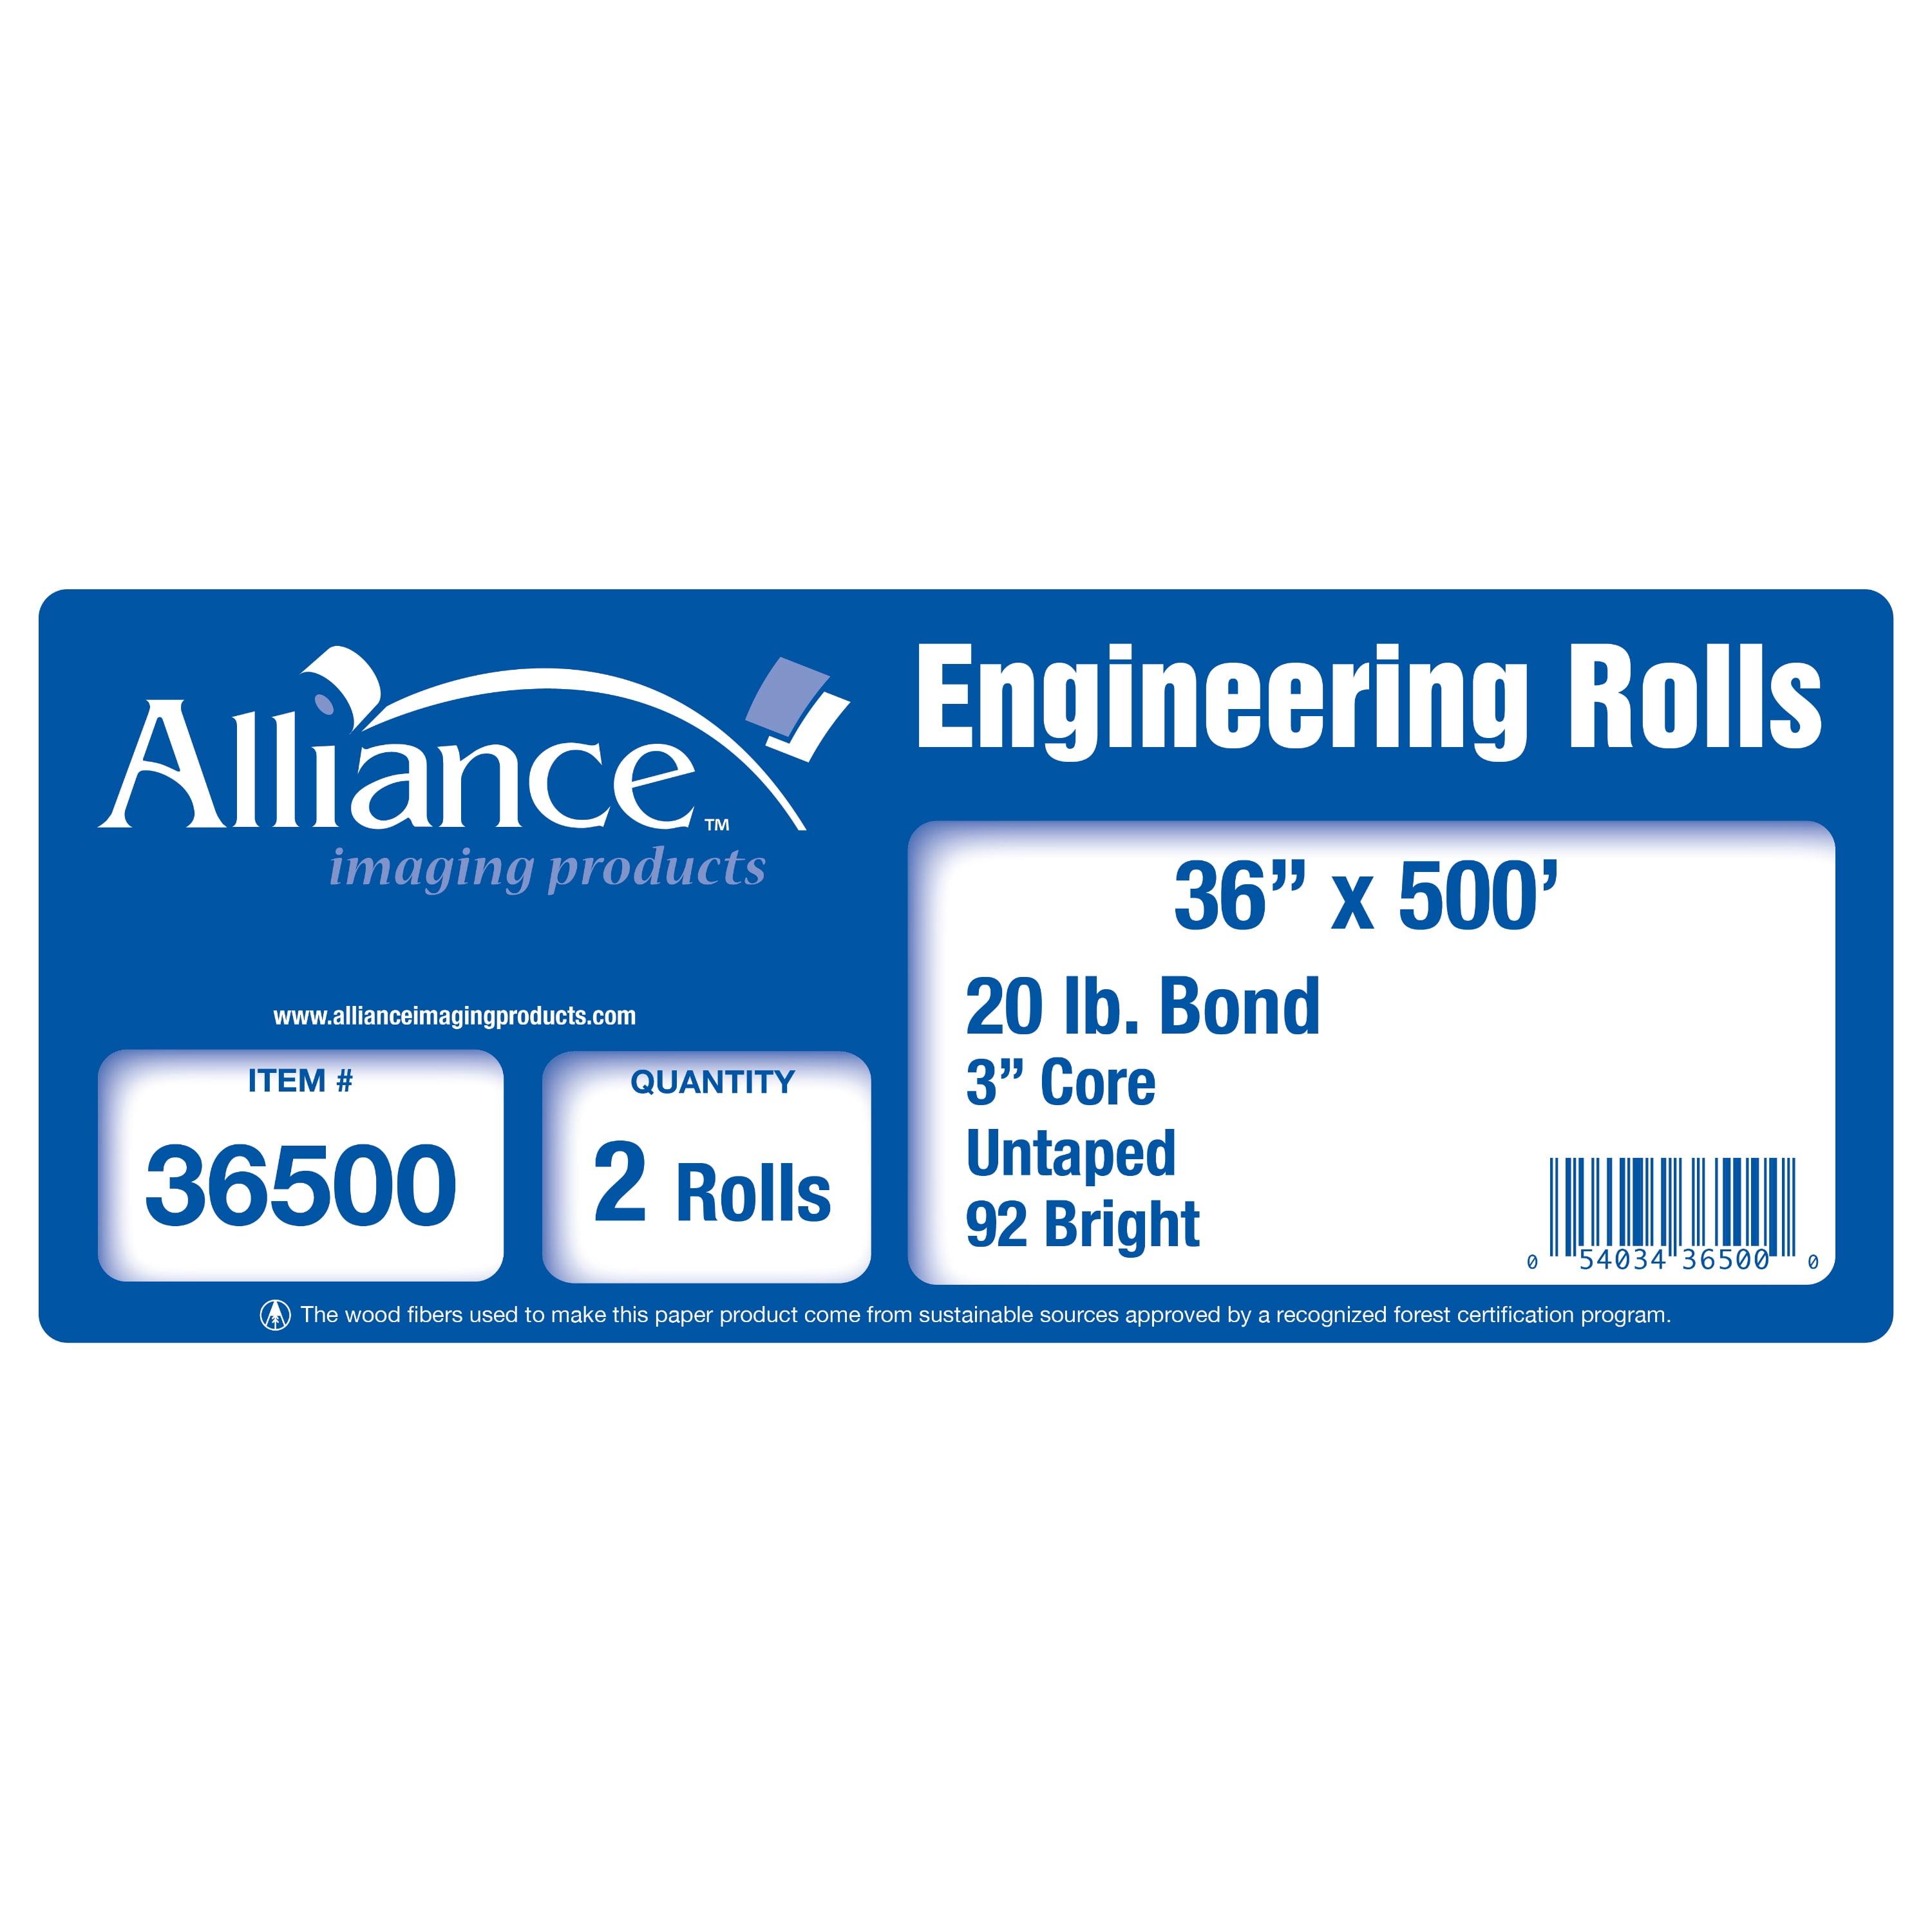 20lb Bond Engineering 36” x 650’ Alliance Paper Rolls 2 Rolls Per Carton with 3” Core 92 Bright 